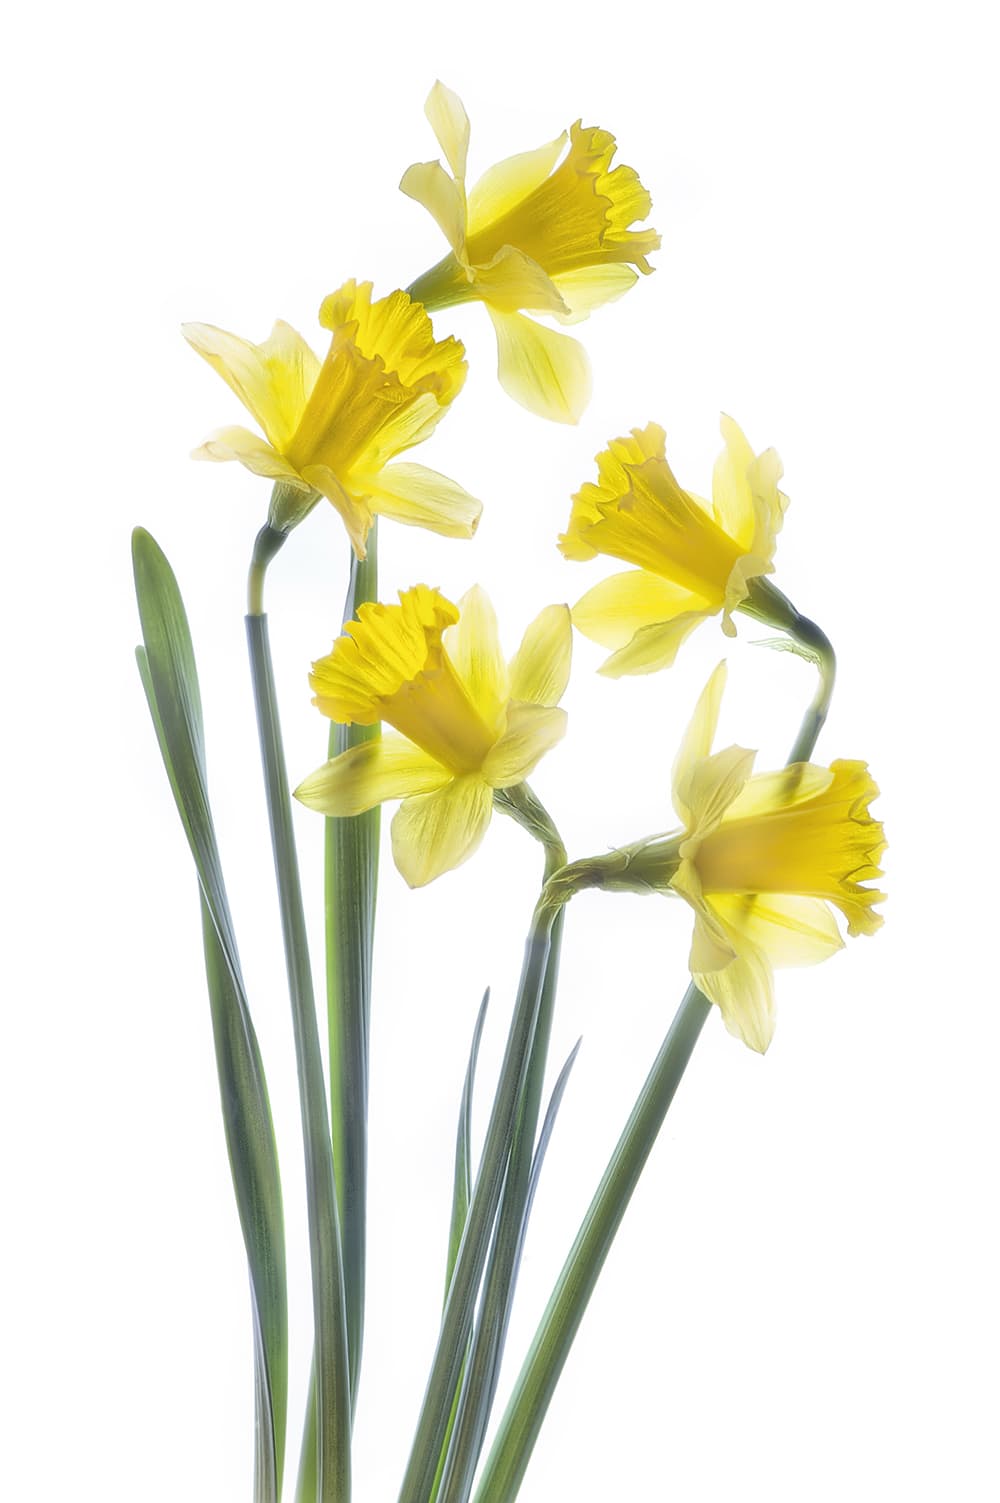 Daffodils by Jacky Parker